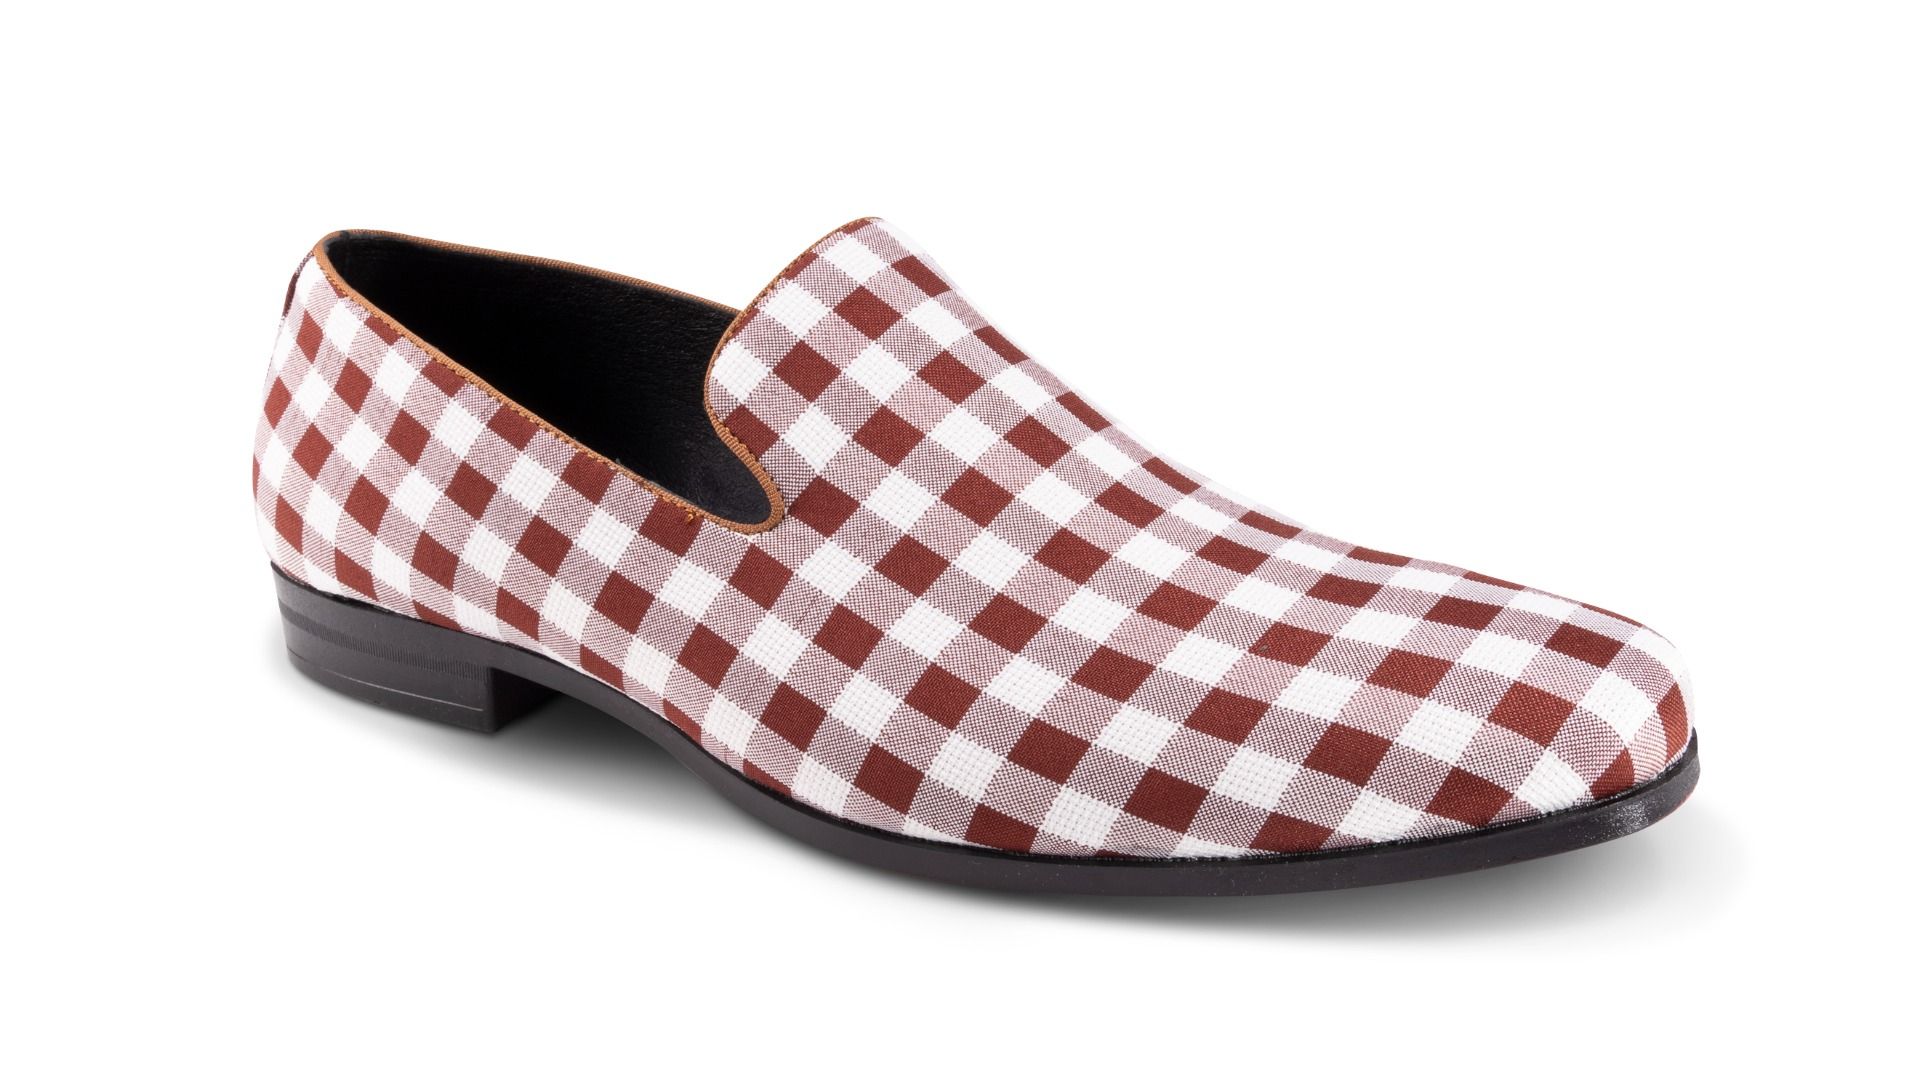 Montique Men's Fashion Loafer - Sleek Plaid